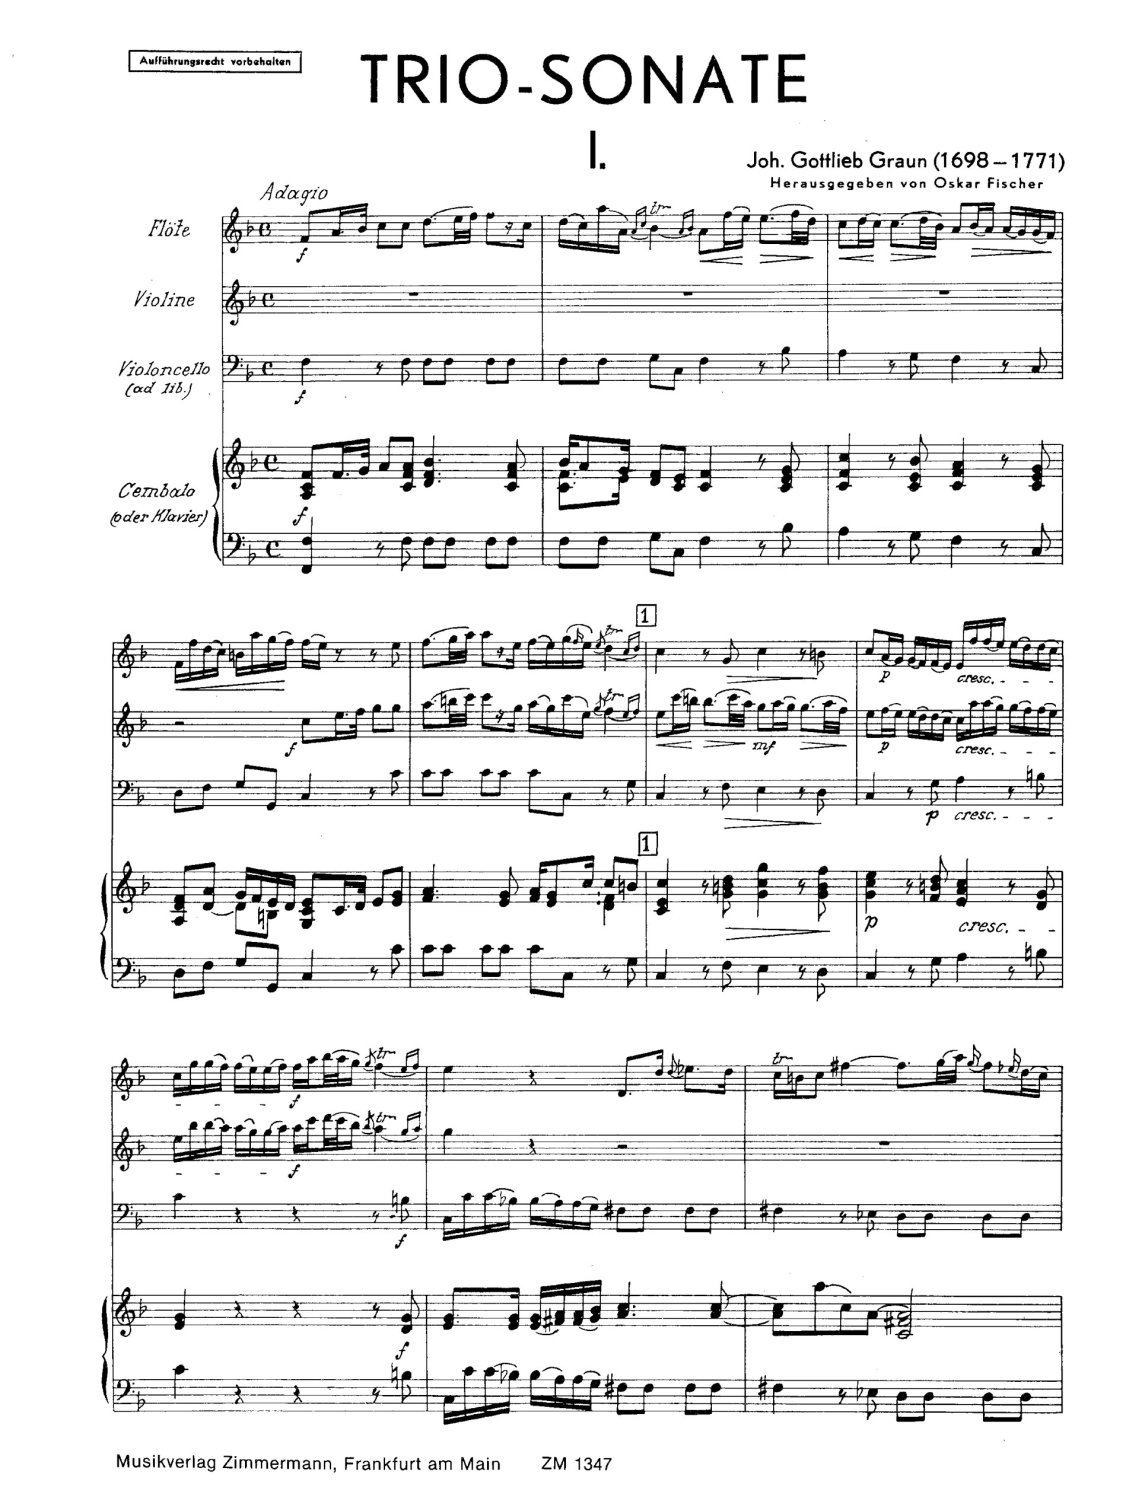 Johann-Gottlieb-Graun-Triosonate-Fl-Vl-Vc-_0006.JPG